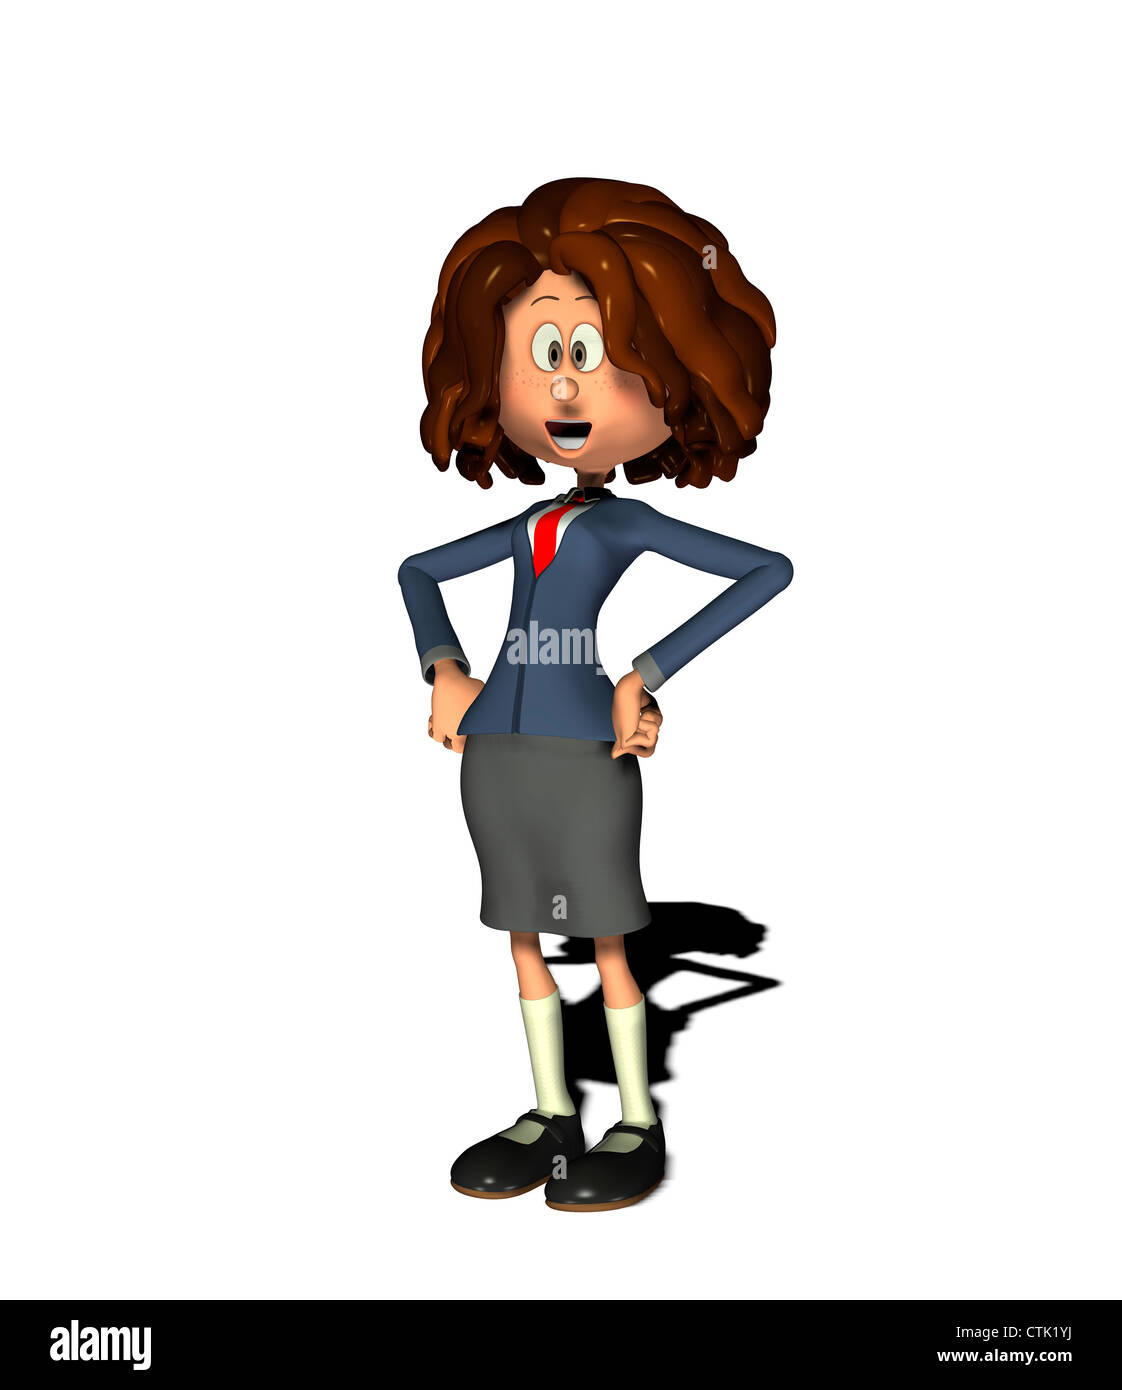 Cartoon figure business woman Stock Photo